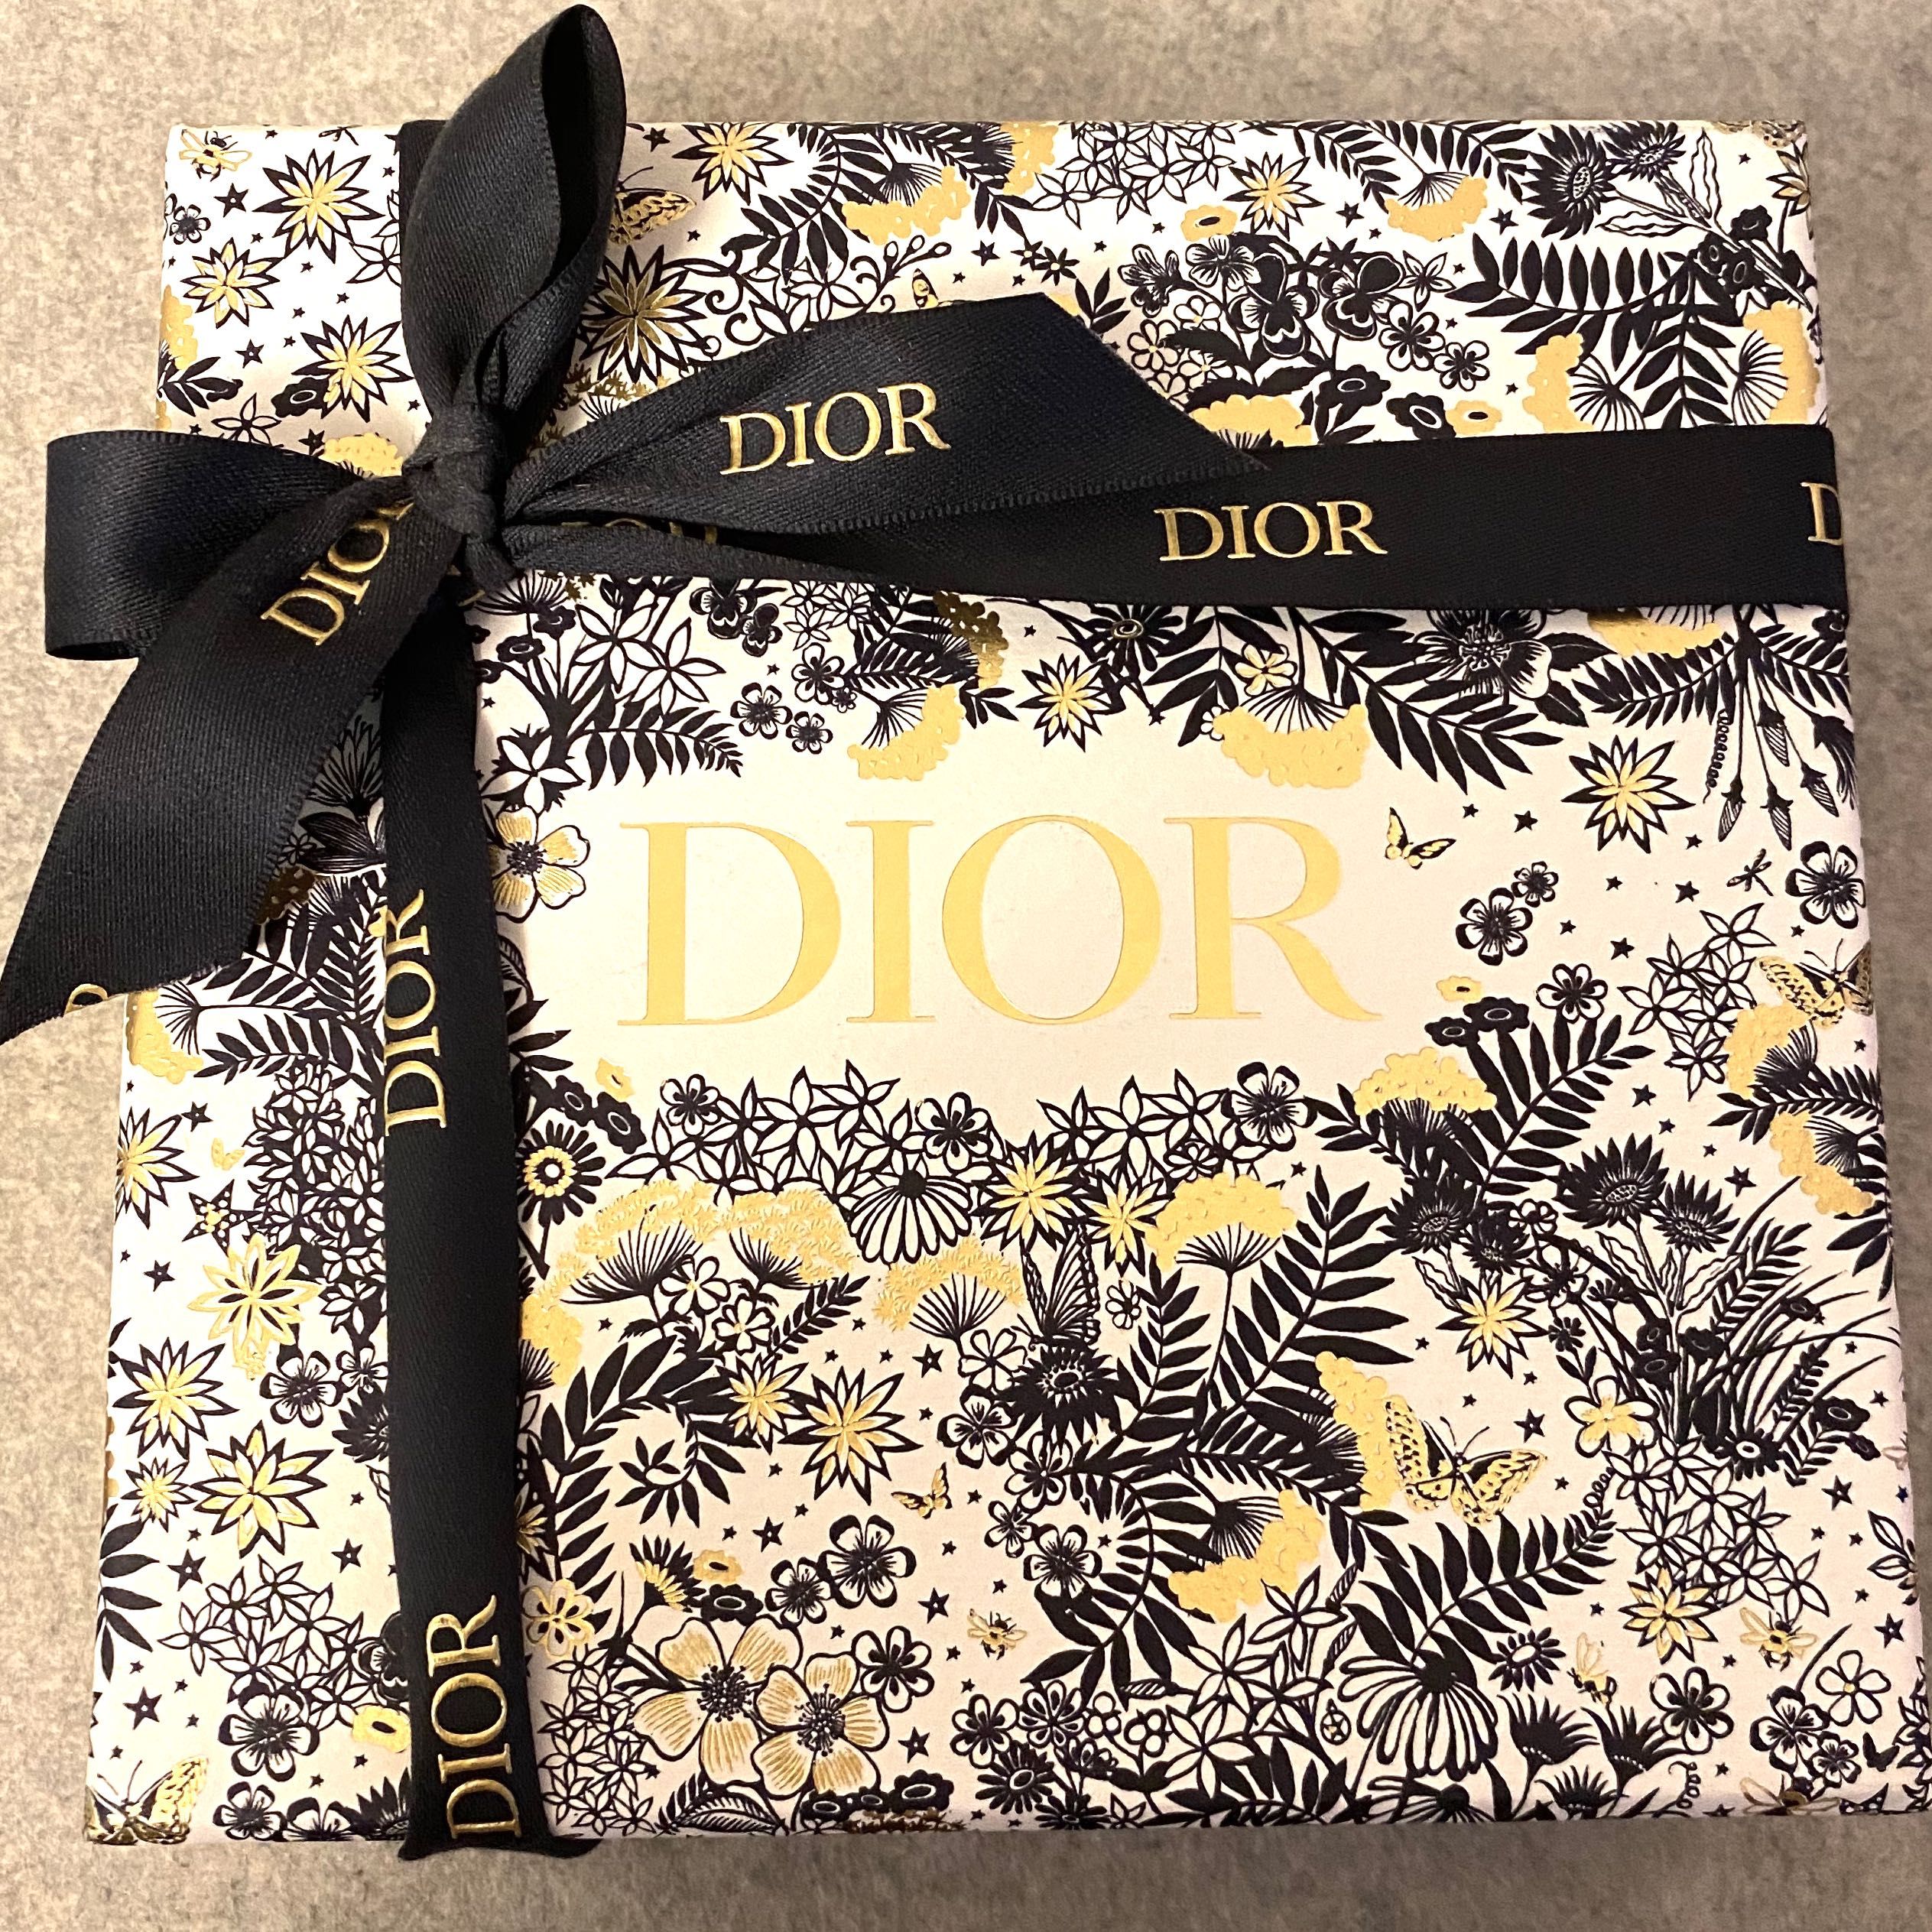 LIMITED EDITION Dior Box / Dior Box with Ribbon, Women's Fashion